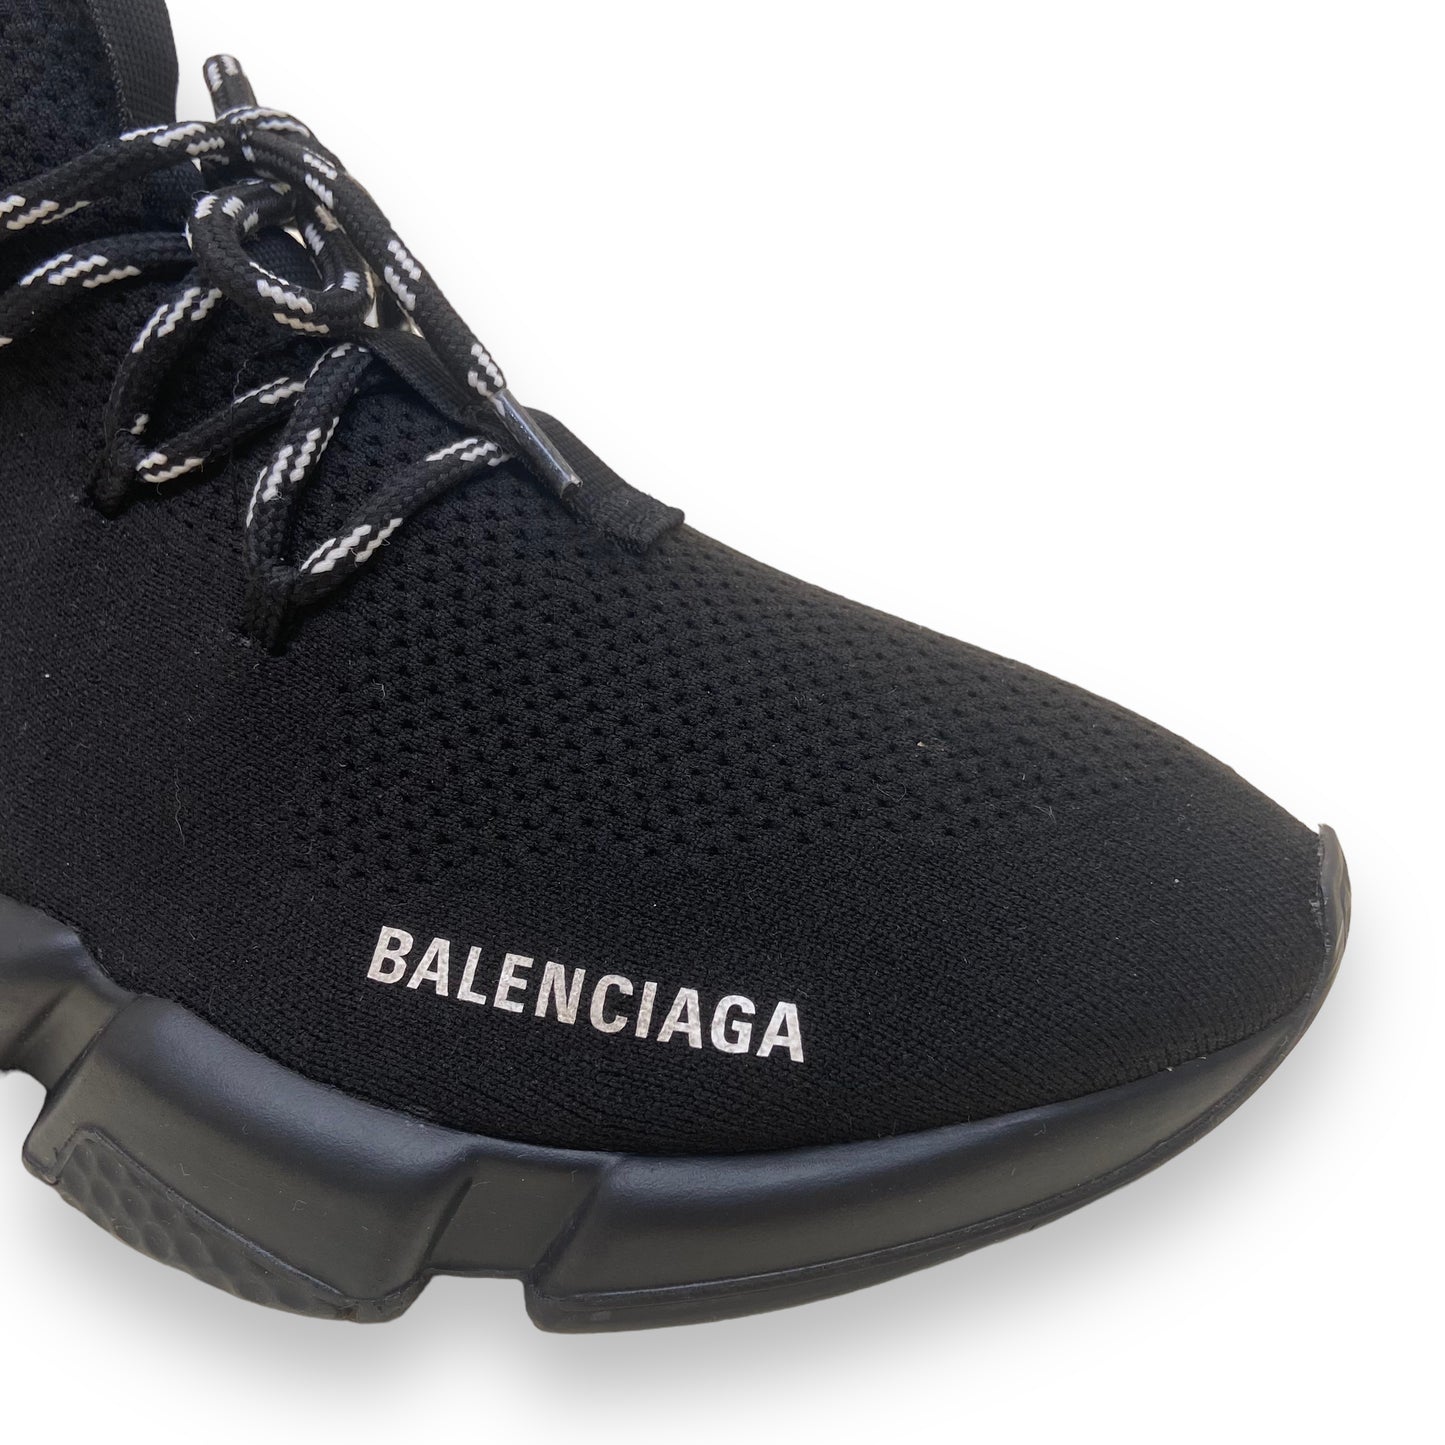 BALENCIAGA SPEED LACE UP SNEAKERS BLACK / WHITE UK8